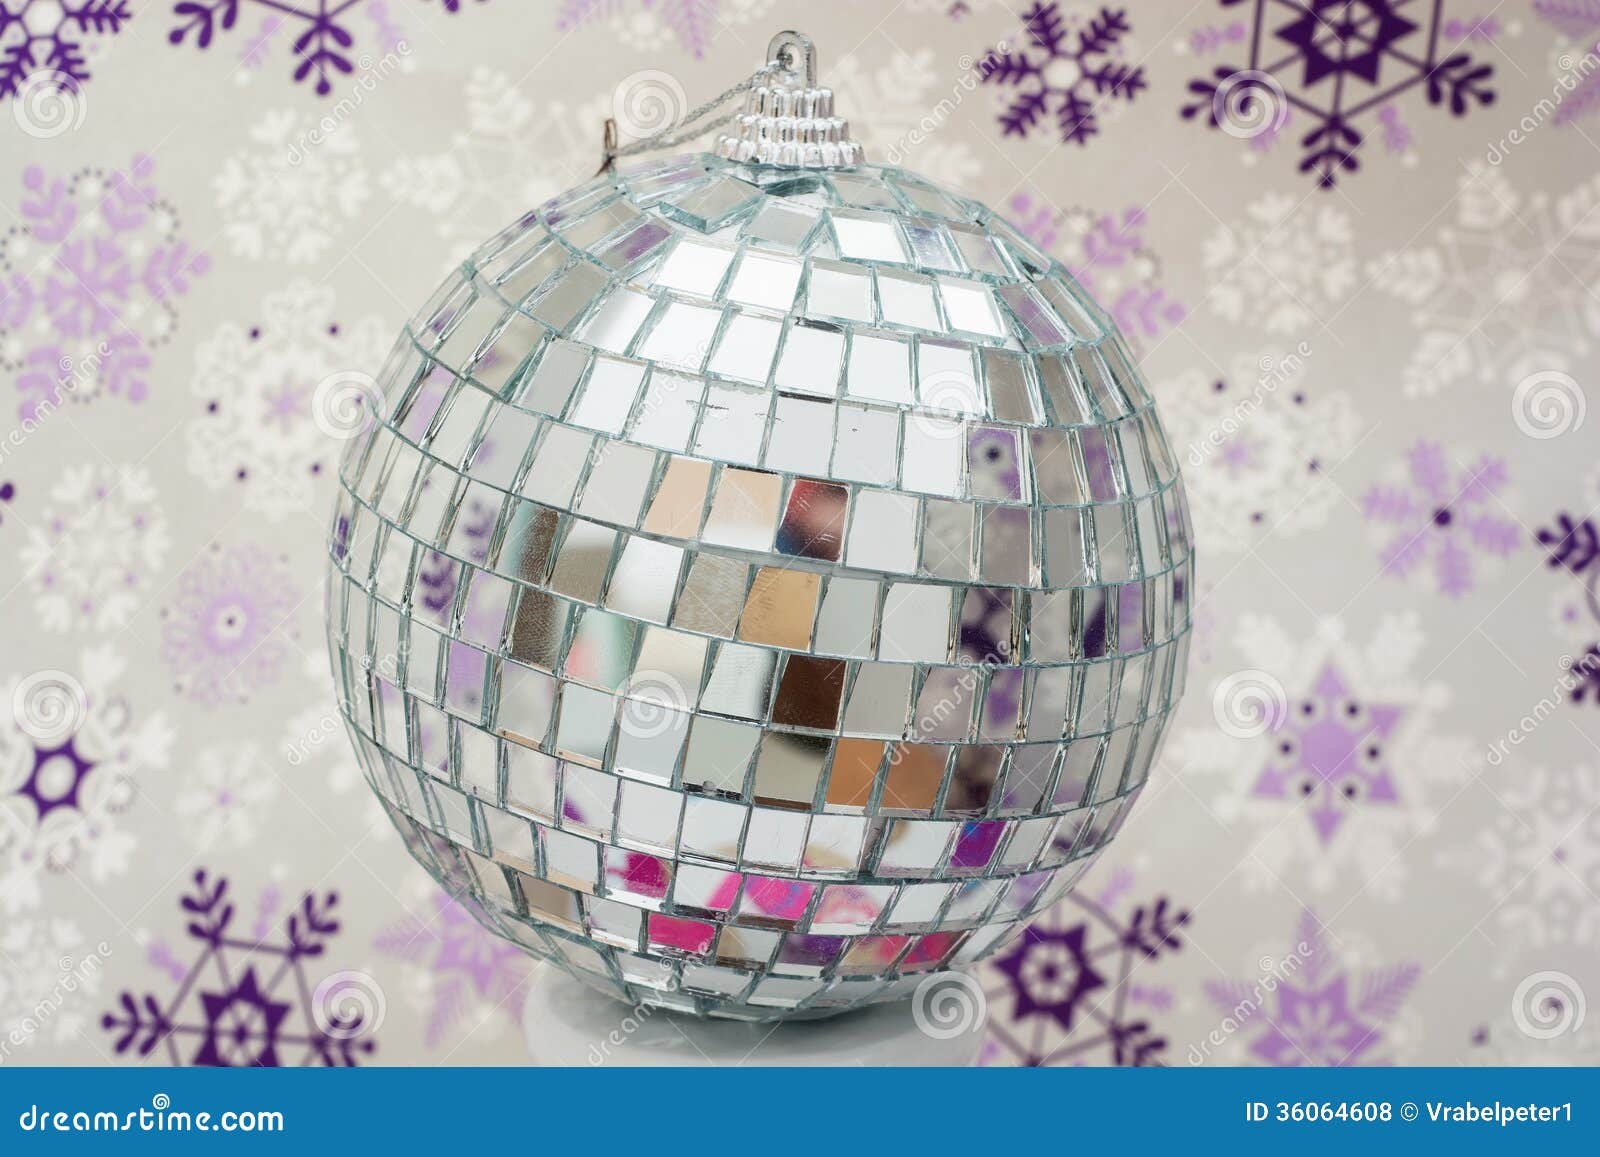 Winter disco ball stock photo. Image of purple, funny - 36064608